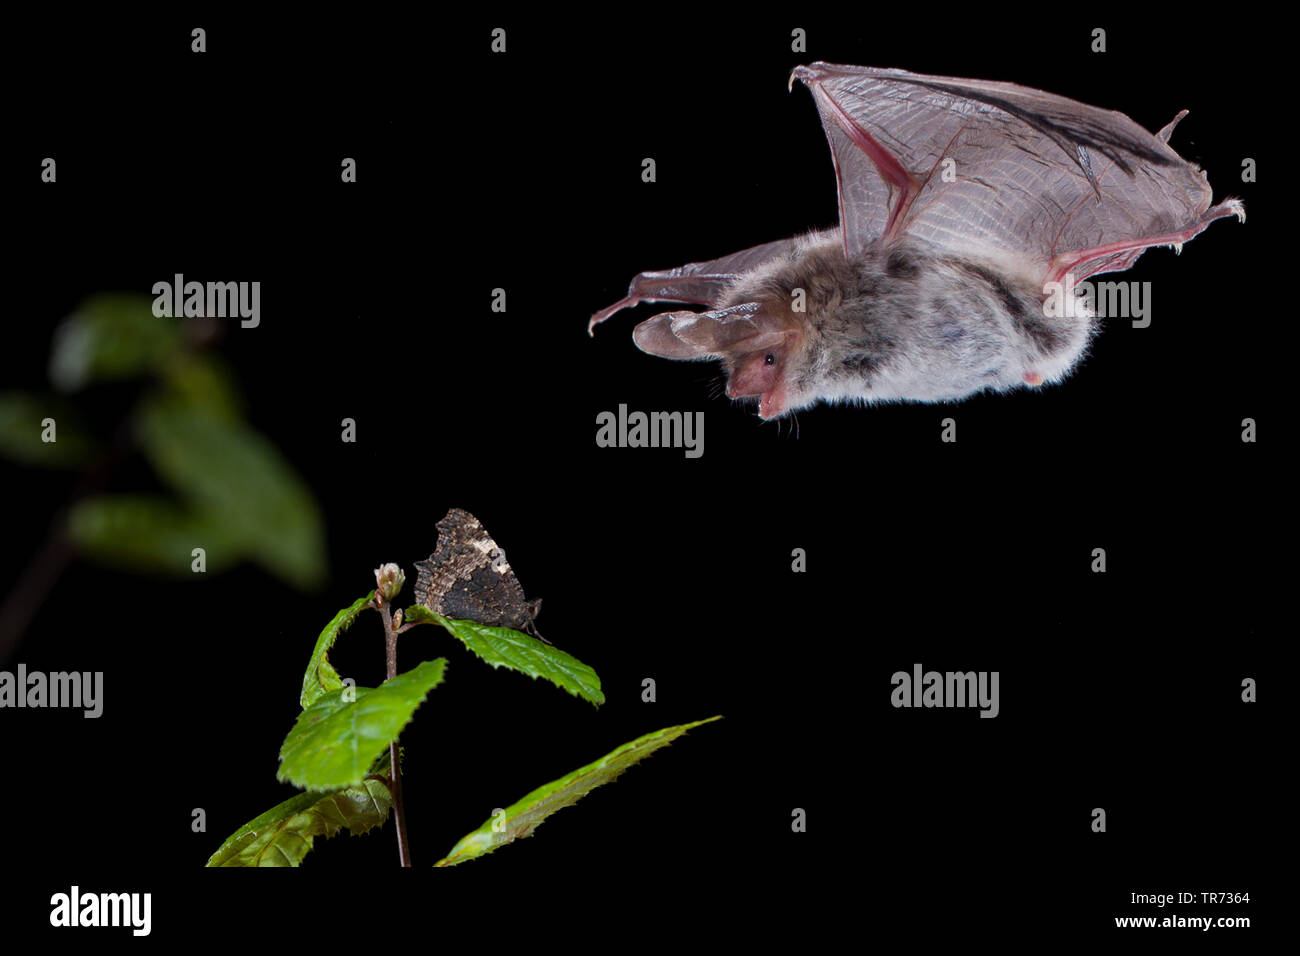 Bechstein's bat (Myotis bechsteinii), flying at night, aiming at butterfly, Belgium Stock Photo